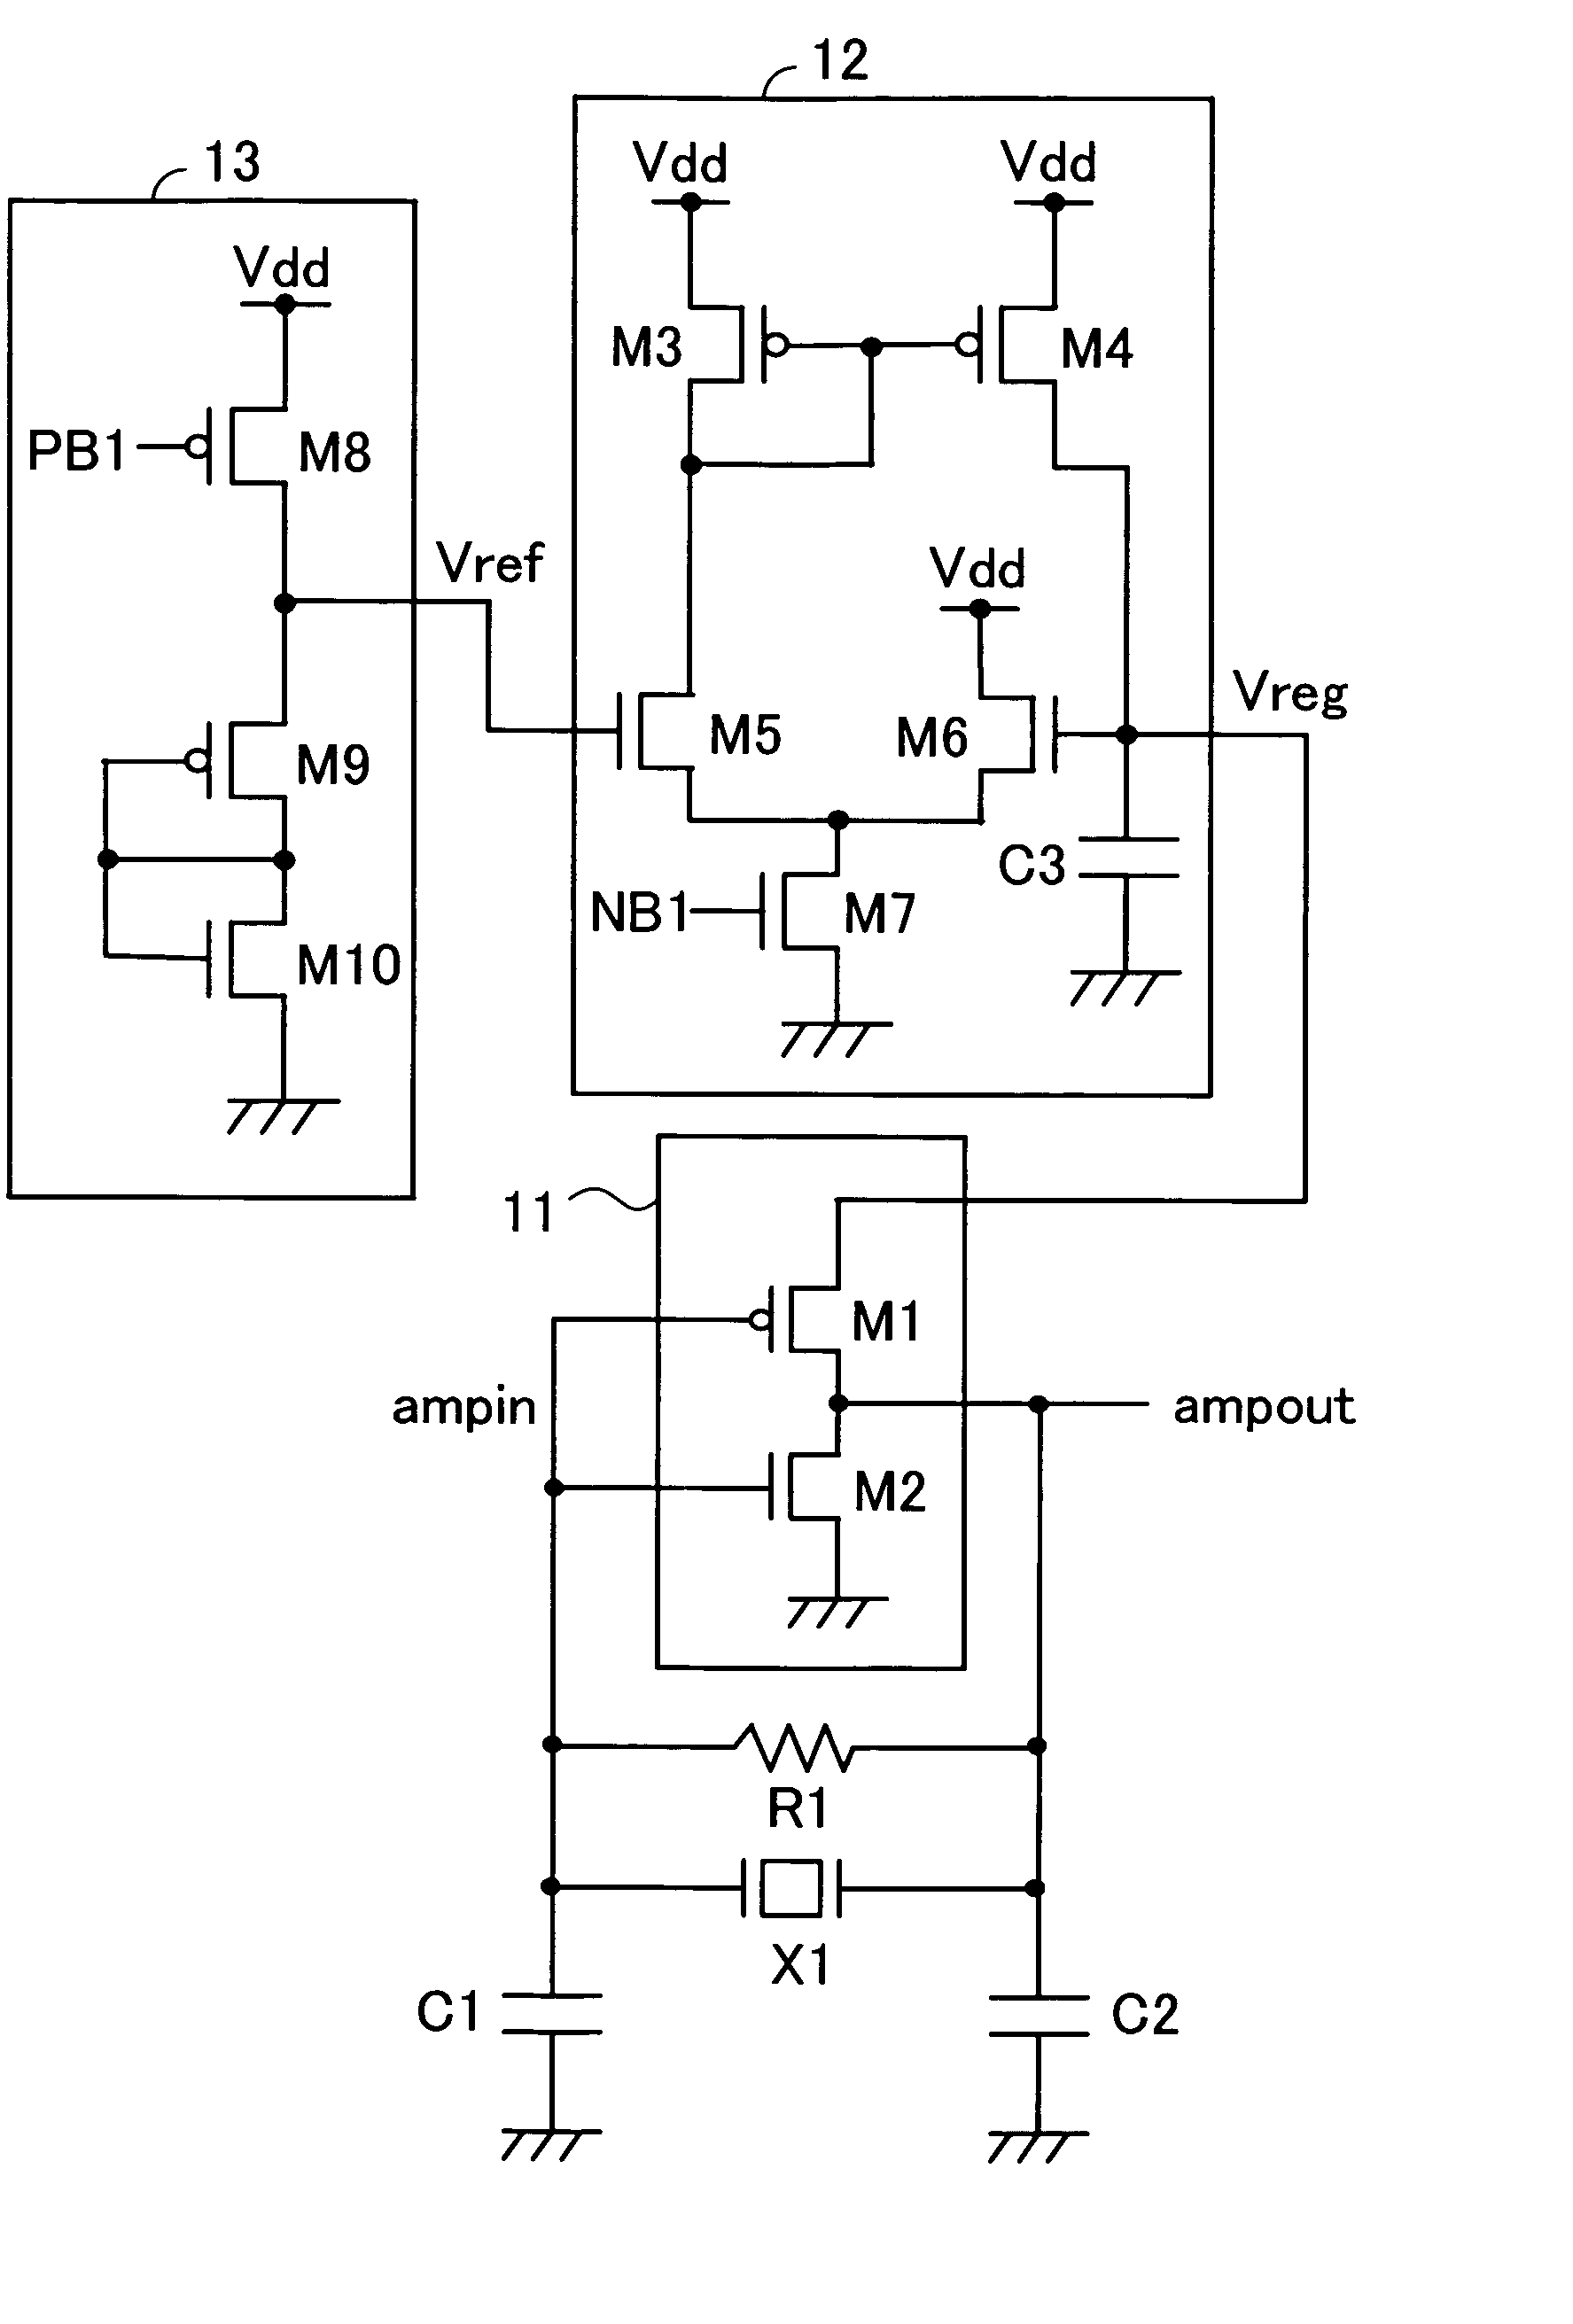 Crystal oscillation circuit